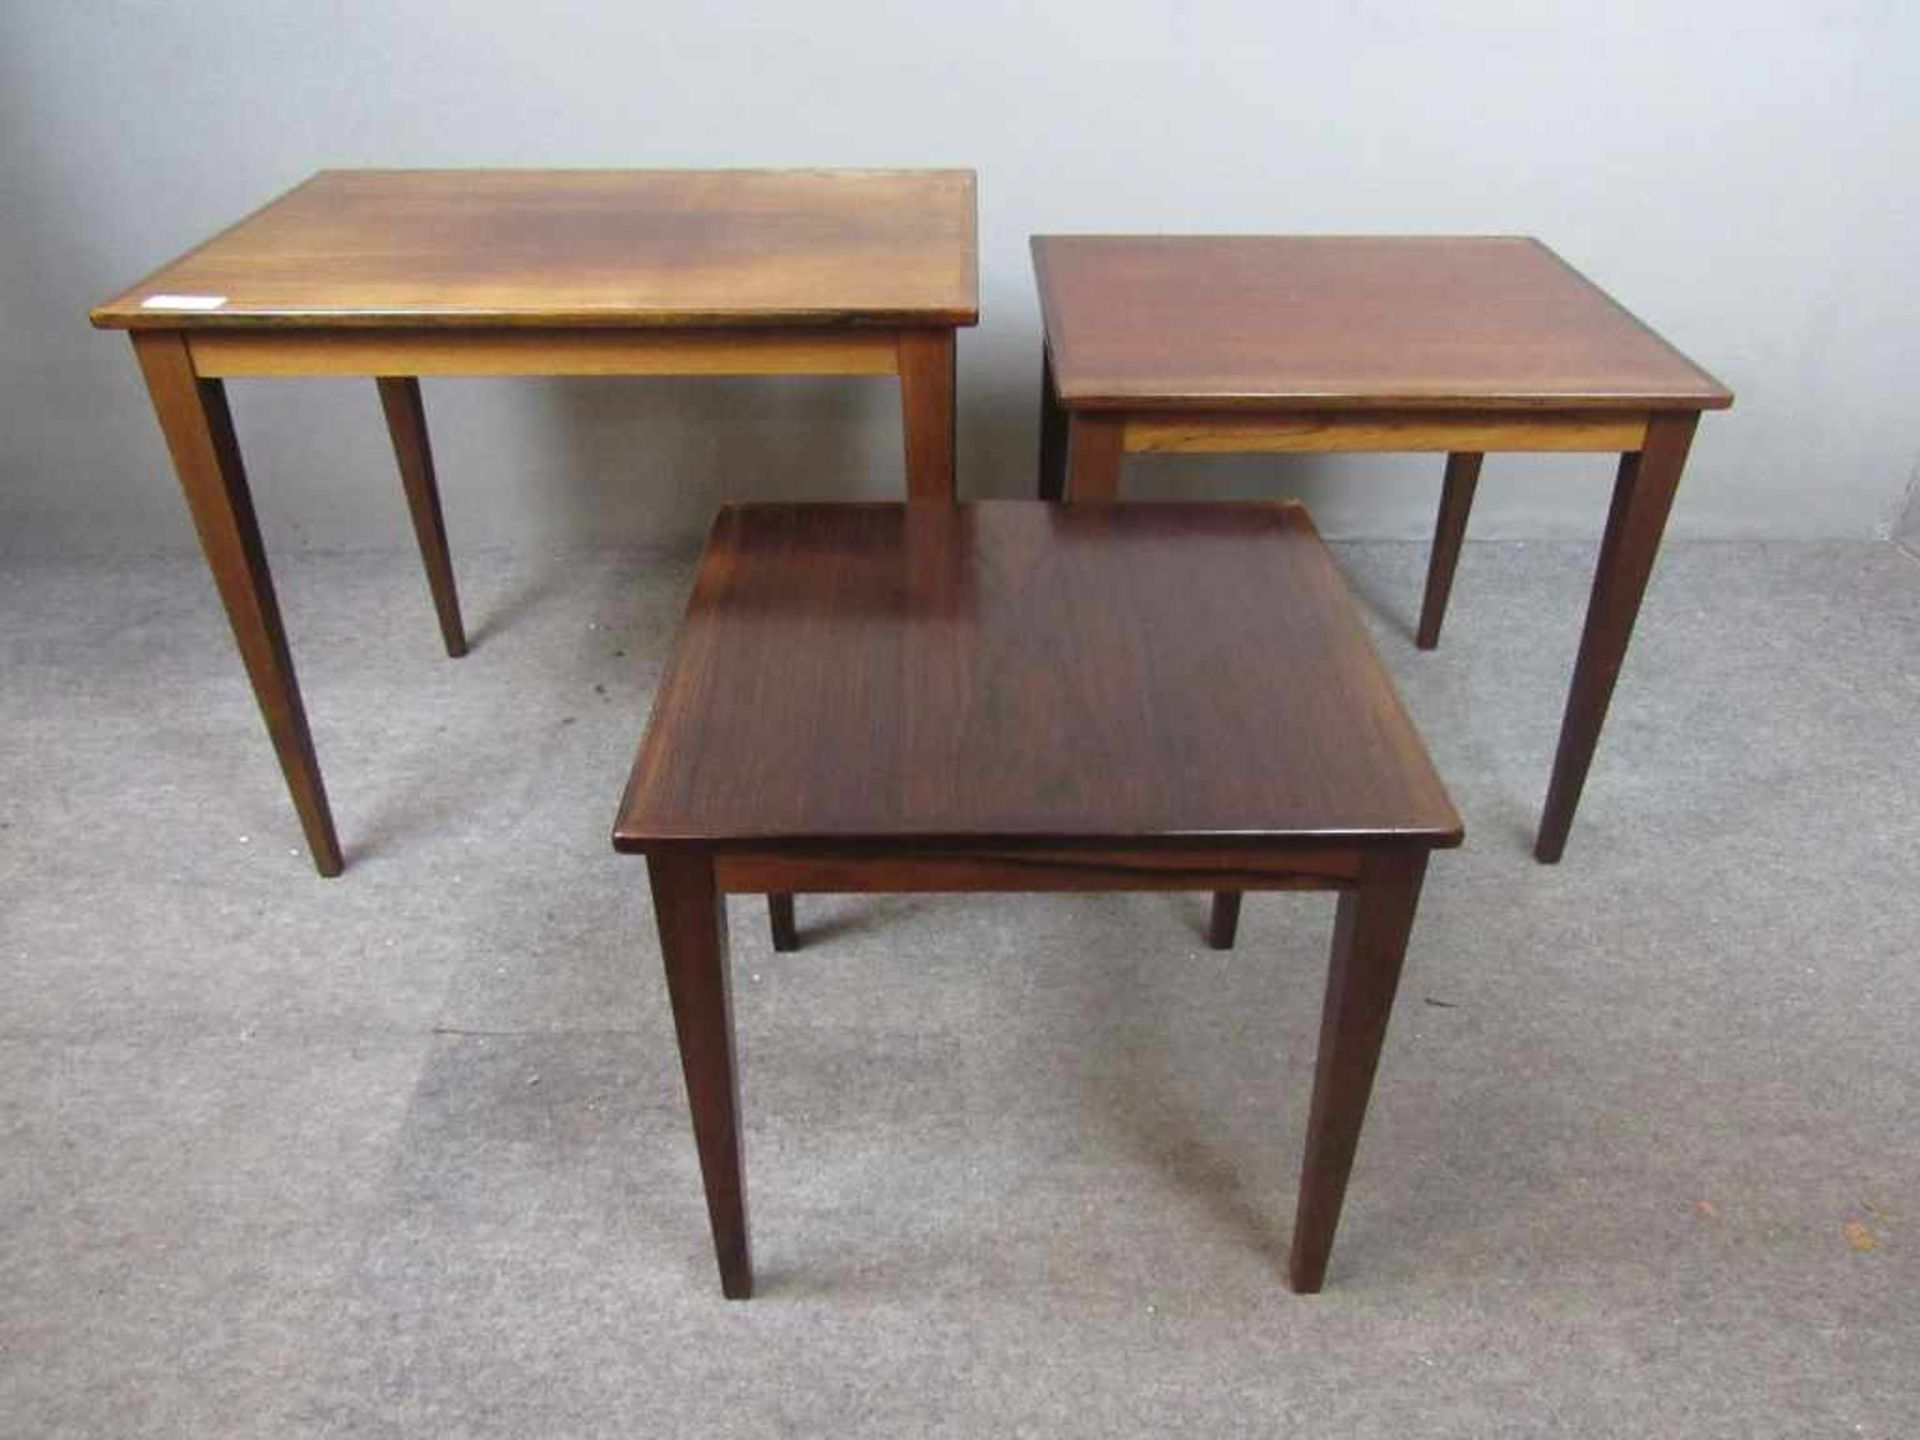 Dreiersatz Nissing Table Teak gestempelt Made in Denmark großer Maße:58x40x53cm- - -20.00 % buyer'